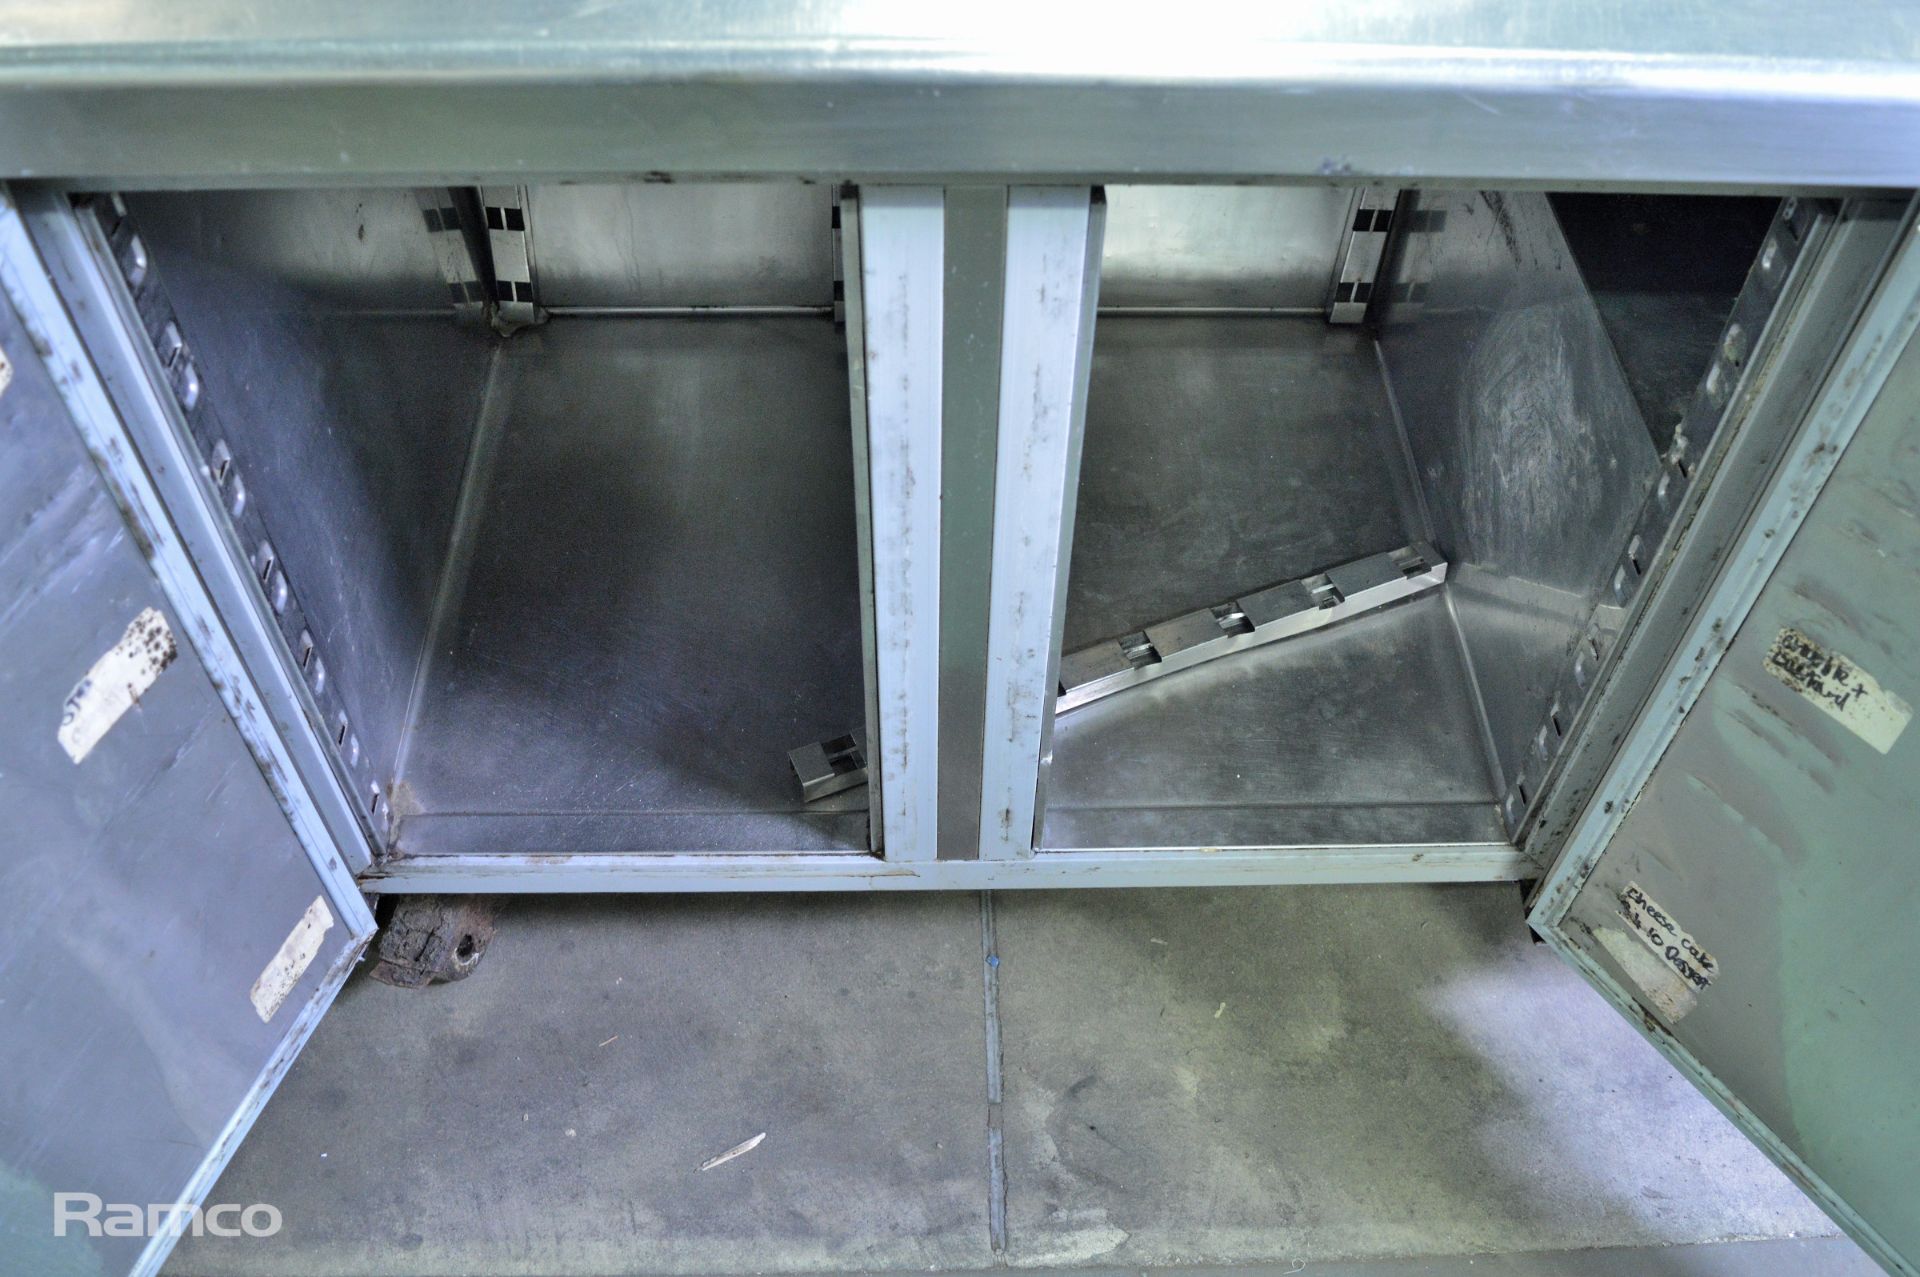 Friulinox TK37 Silver 3 door counter refrigerator - 230V - 50Hz - Image 2 of 7